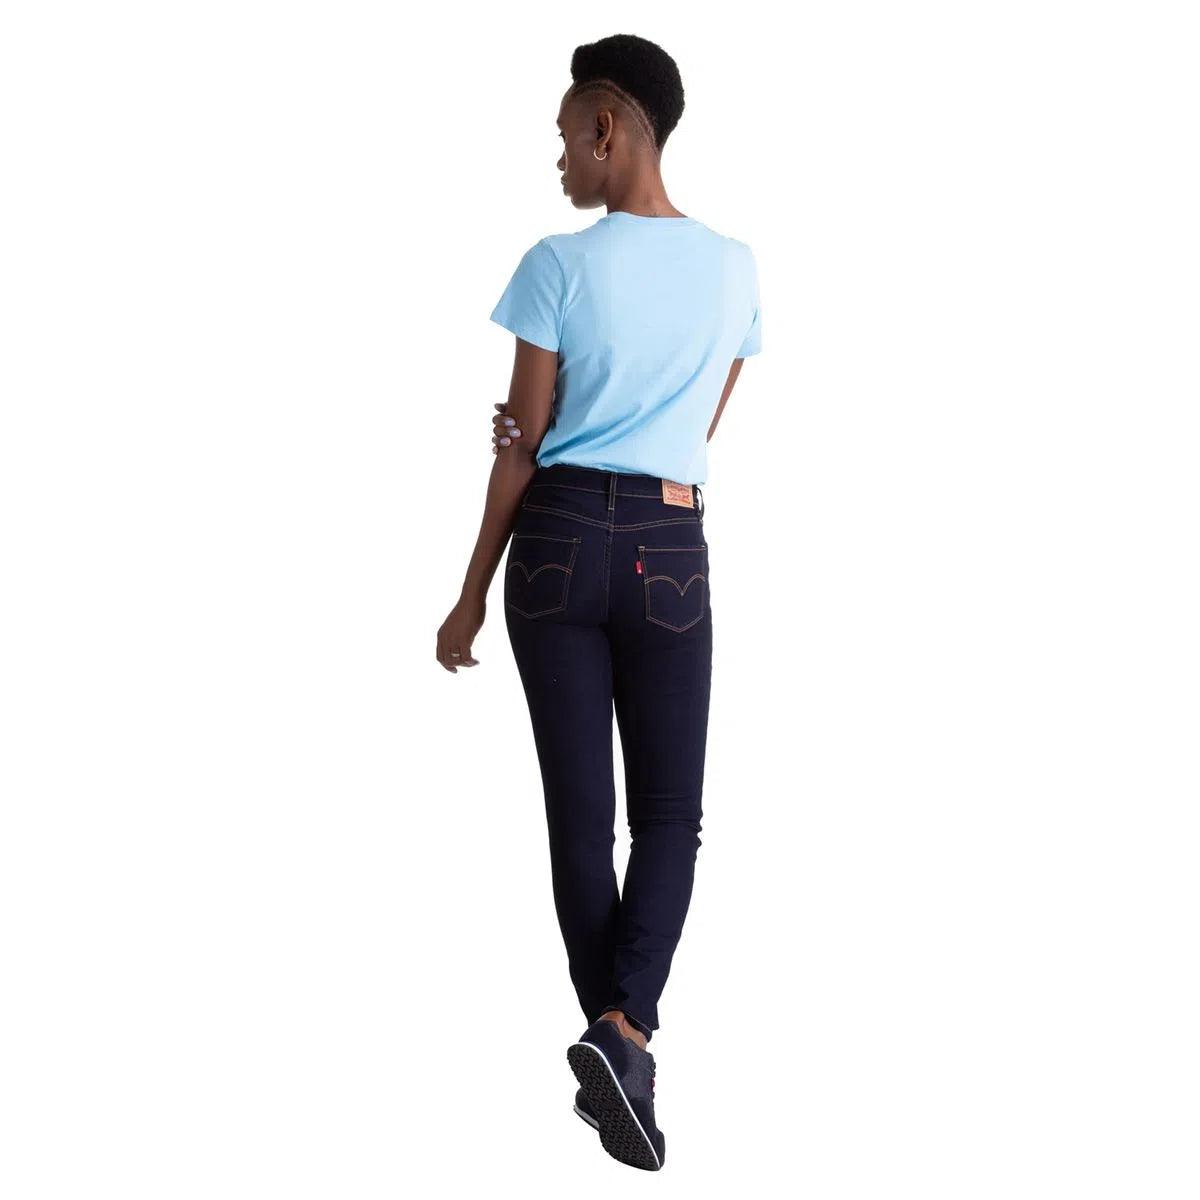 Calça Jeans Levi's® 721 High Rise Skinny - Strut